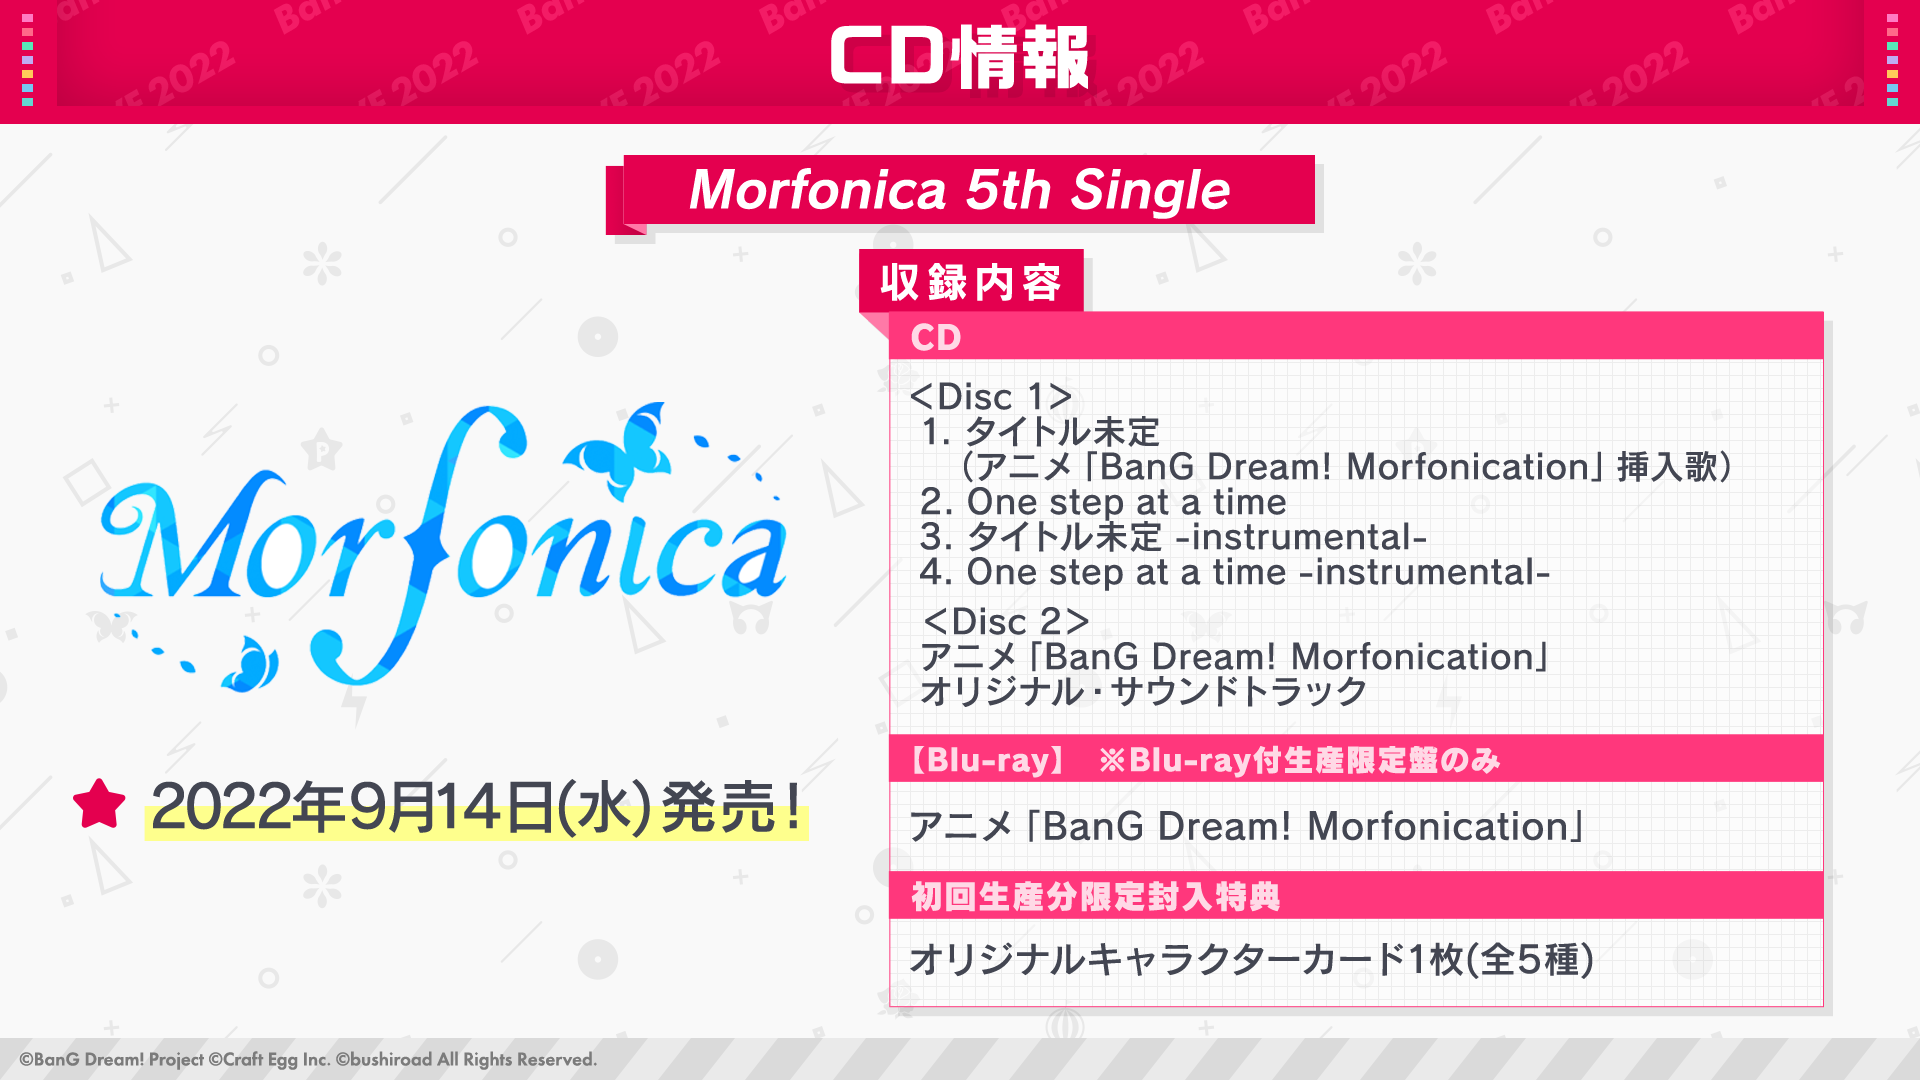 Morfonica 5th SingleのBlu-ray付生産限定盤にアニメ映像の封入が決定